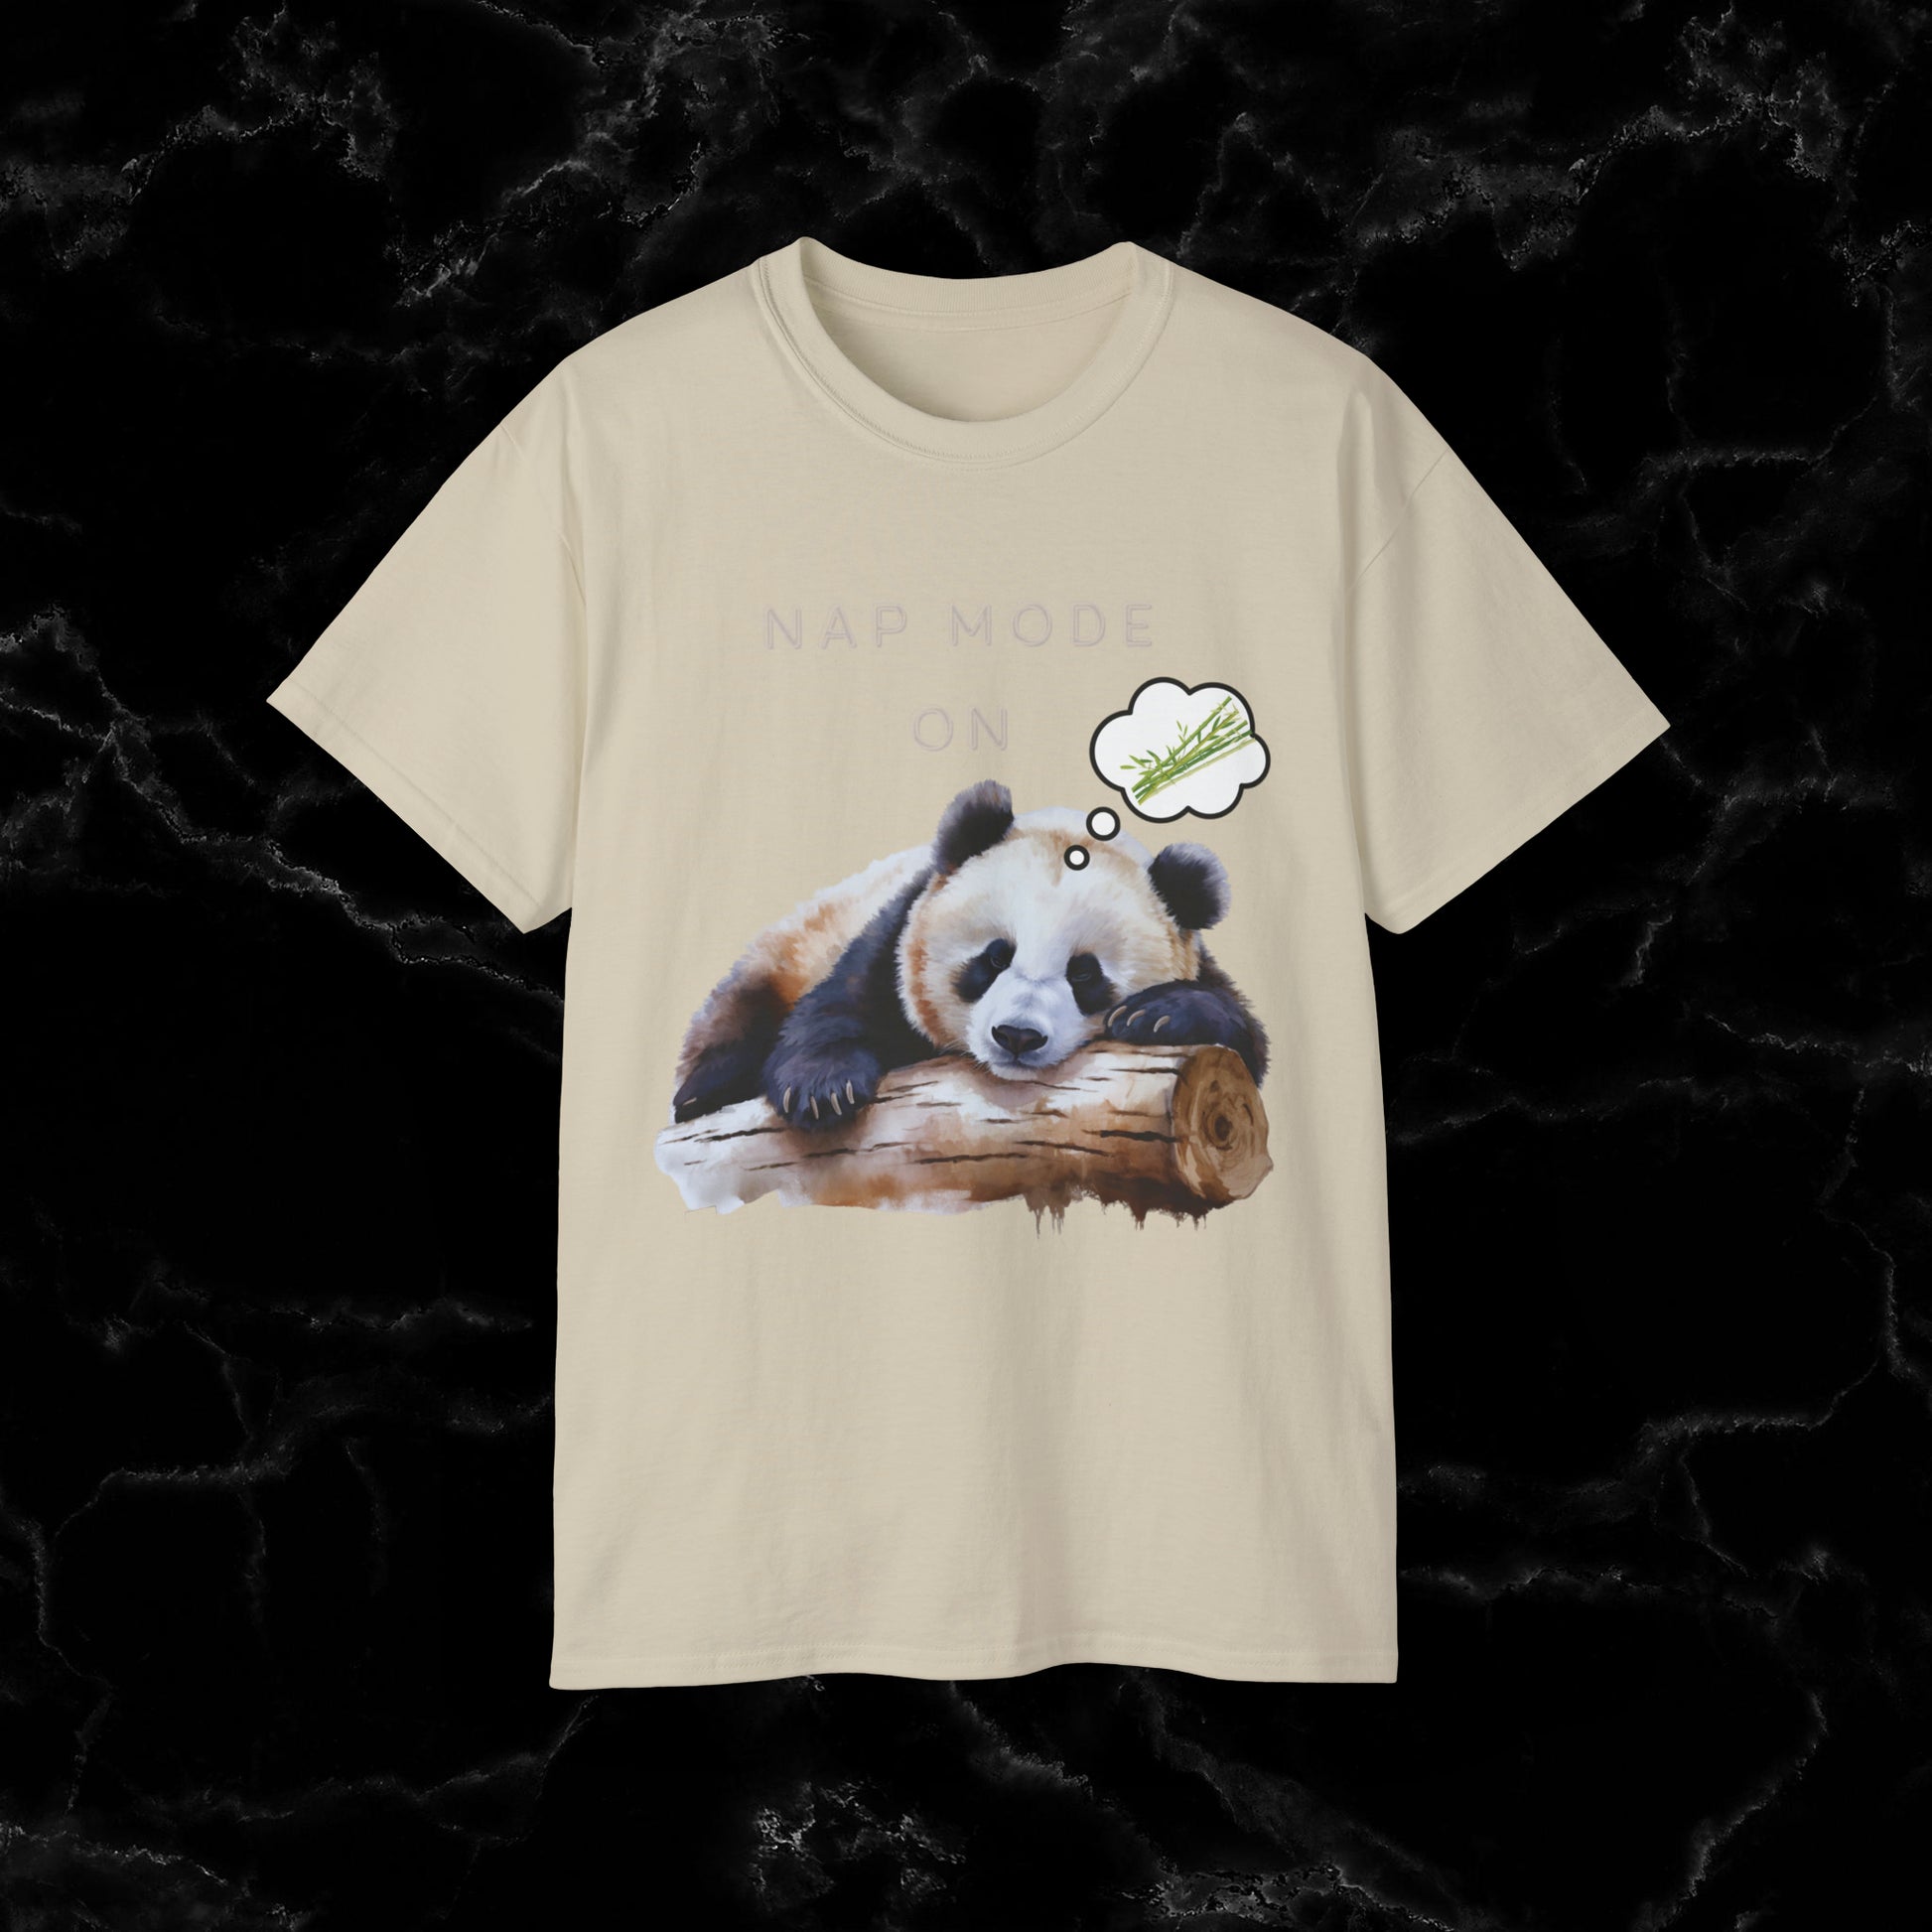 Nap Time Panda Unisex Funny Tee - Hilarious Panda Nap Mode On T-Shirt Sand M 